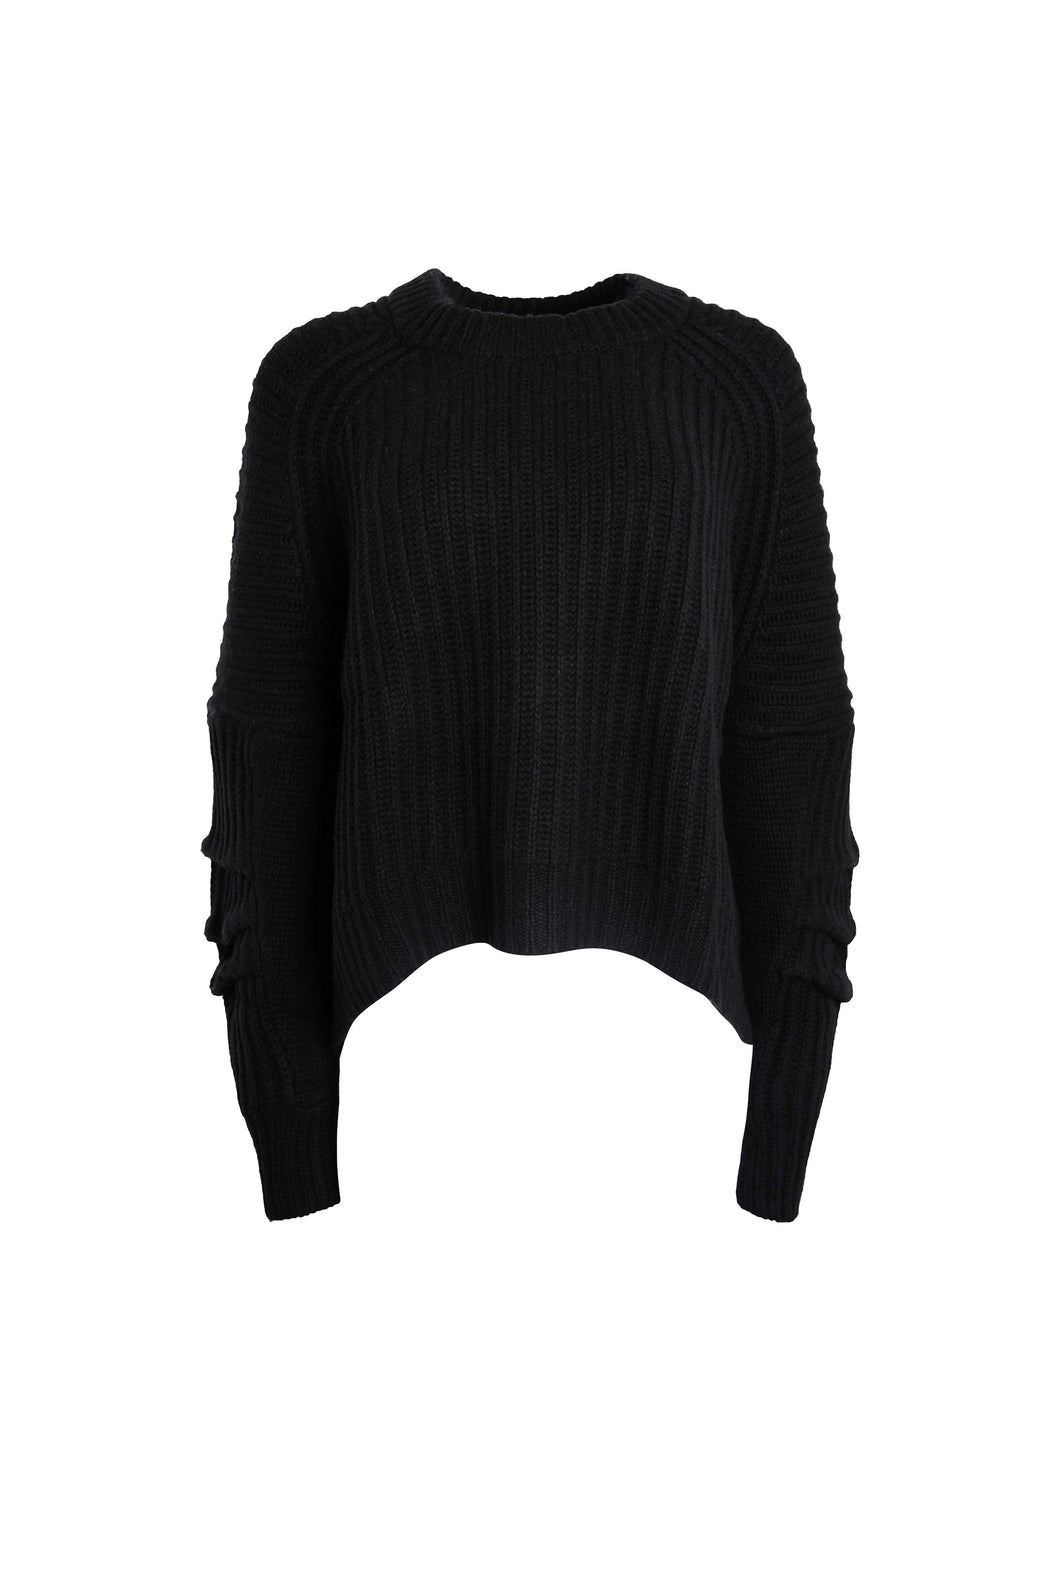 Altuzarra_Biker Sweater-Black